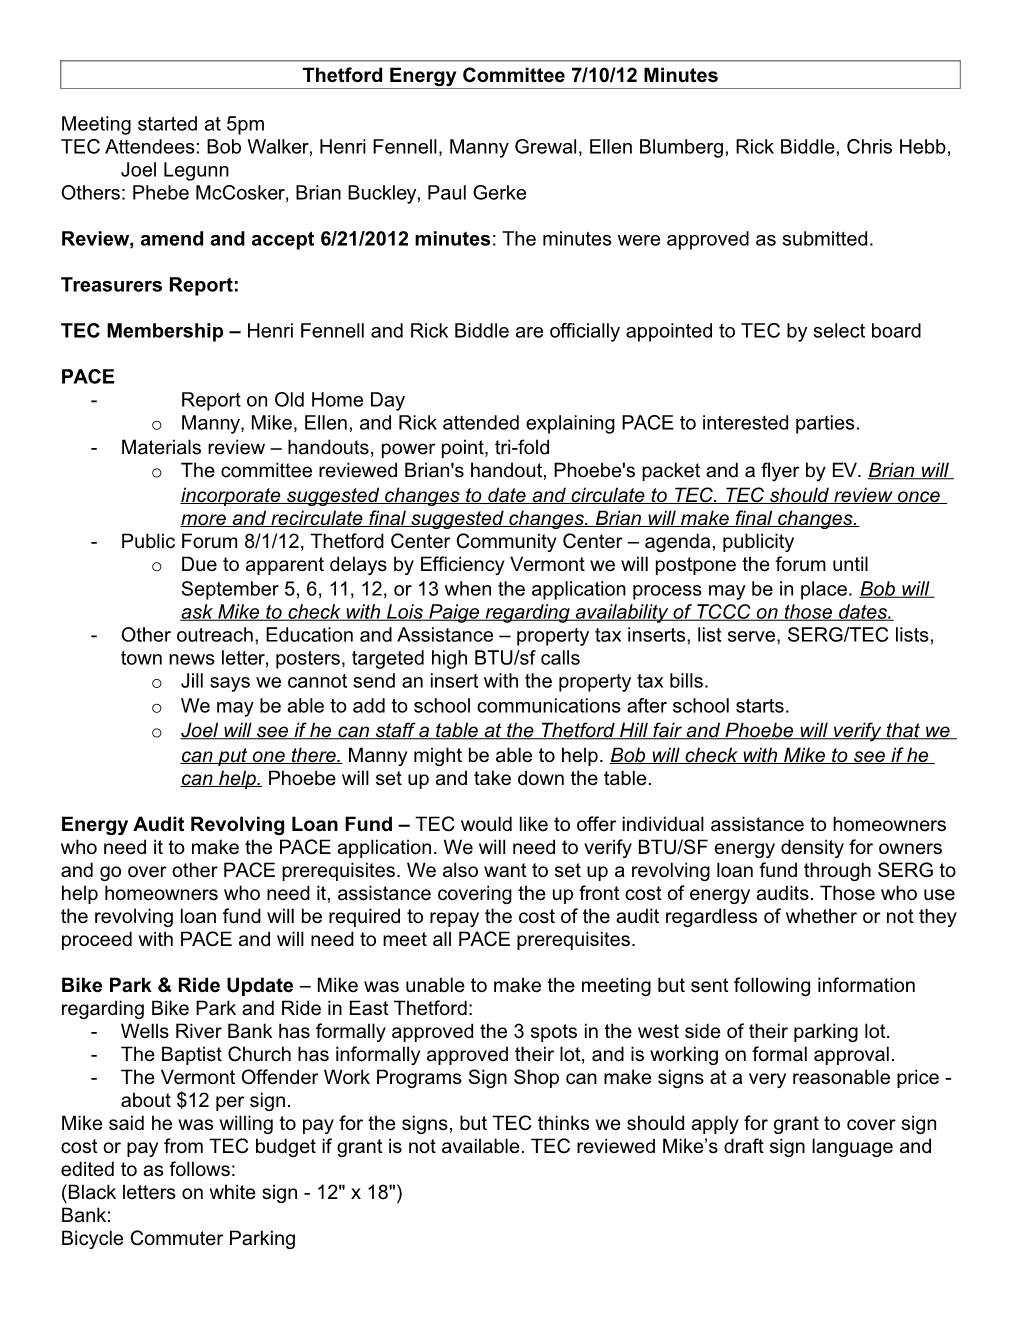 Thetford Energy Committee 9/13/11 Agenda/Notes